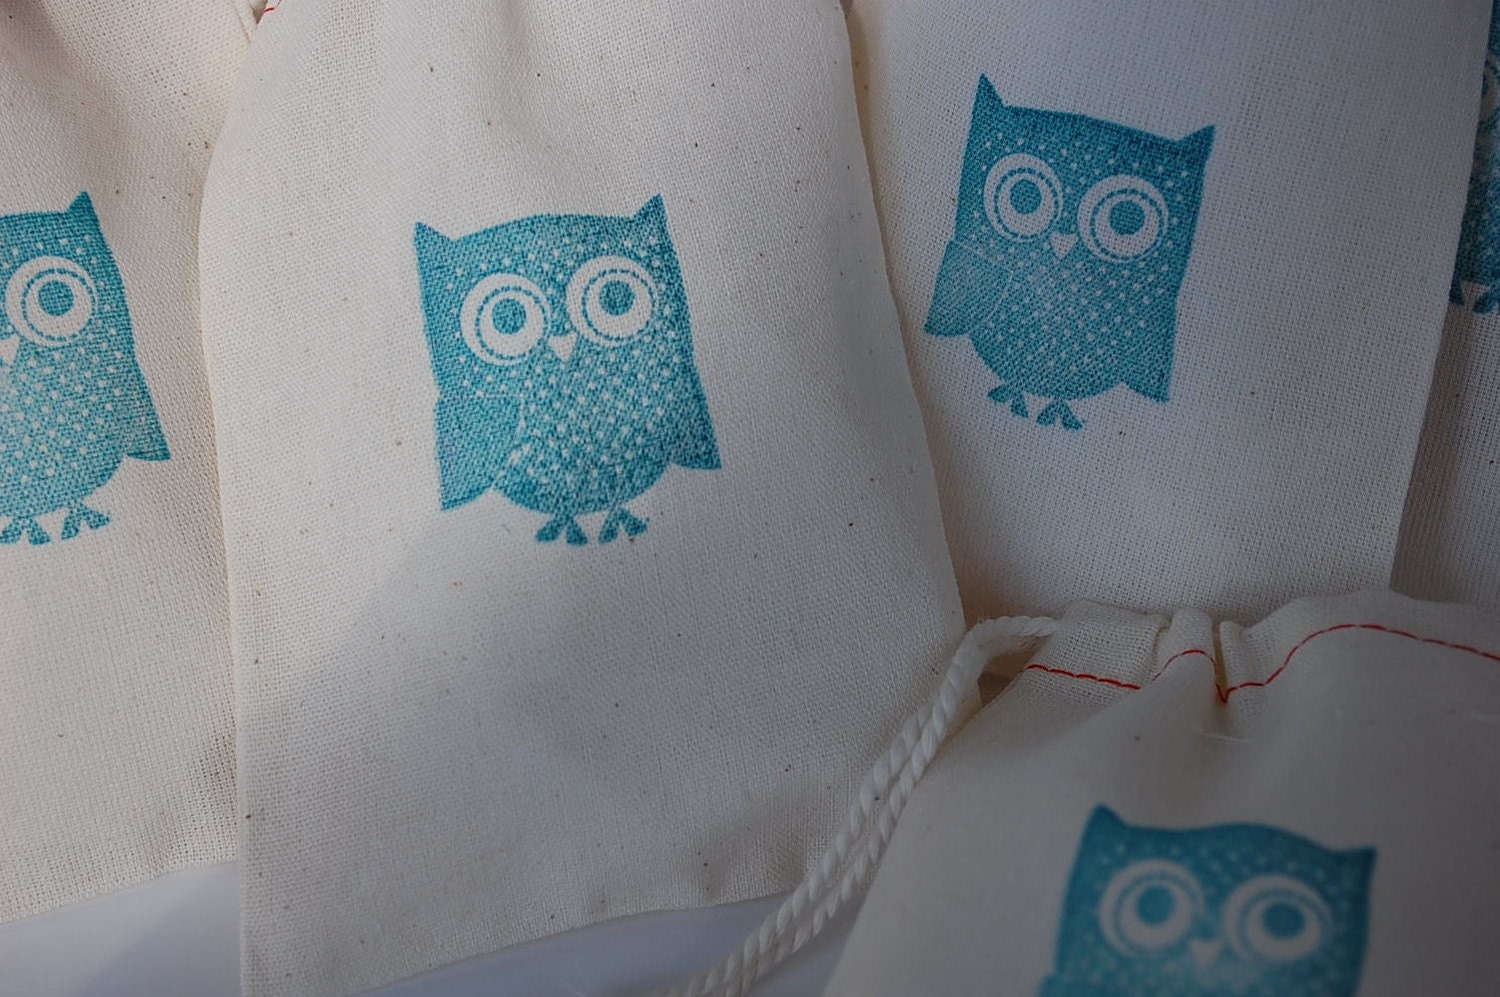 10 Teal Owl Cotton Muslin Drawstring Favor Gift Bags 4x6